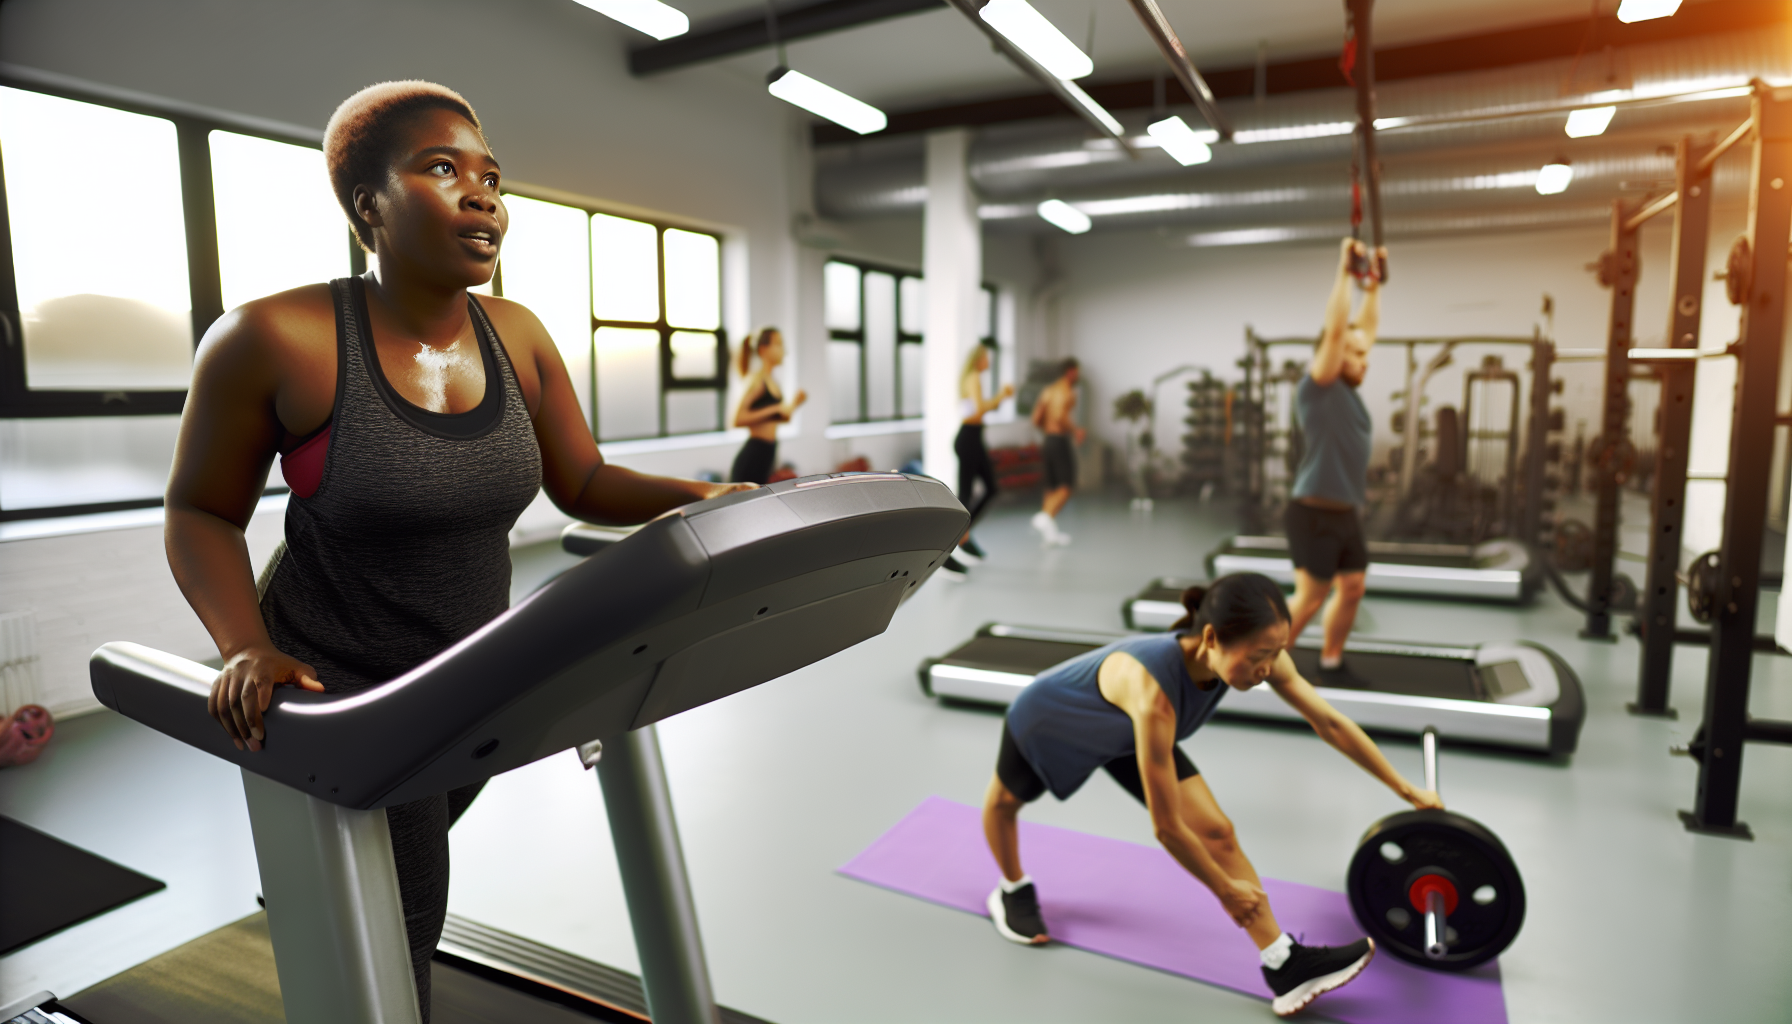 A balanced exercise program including cardio, strength training, and flexibility exercises